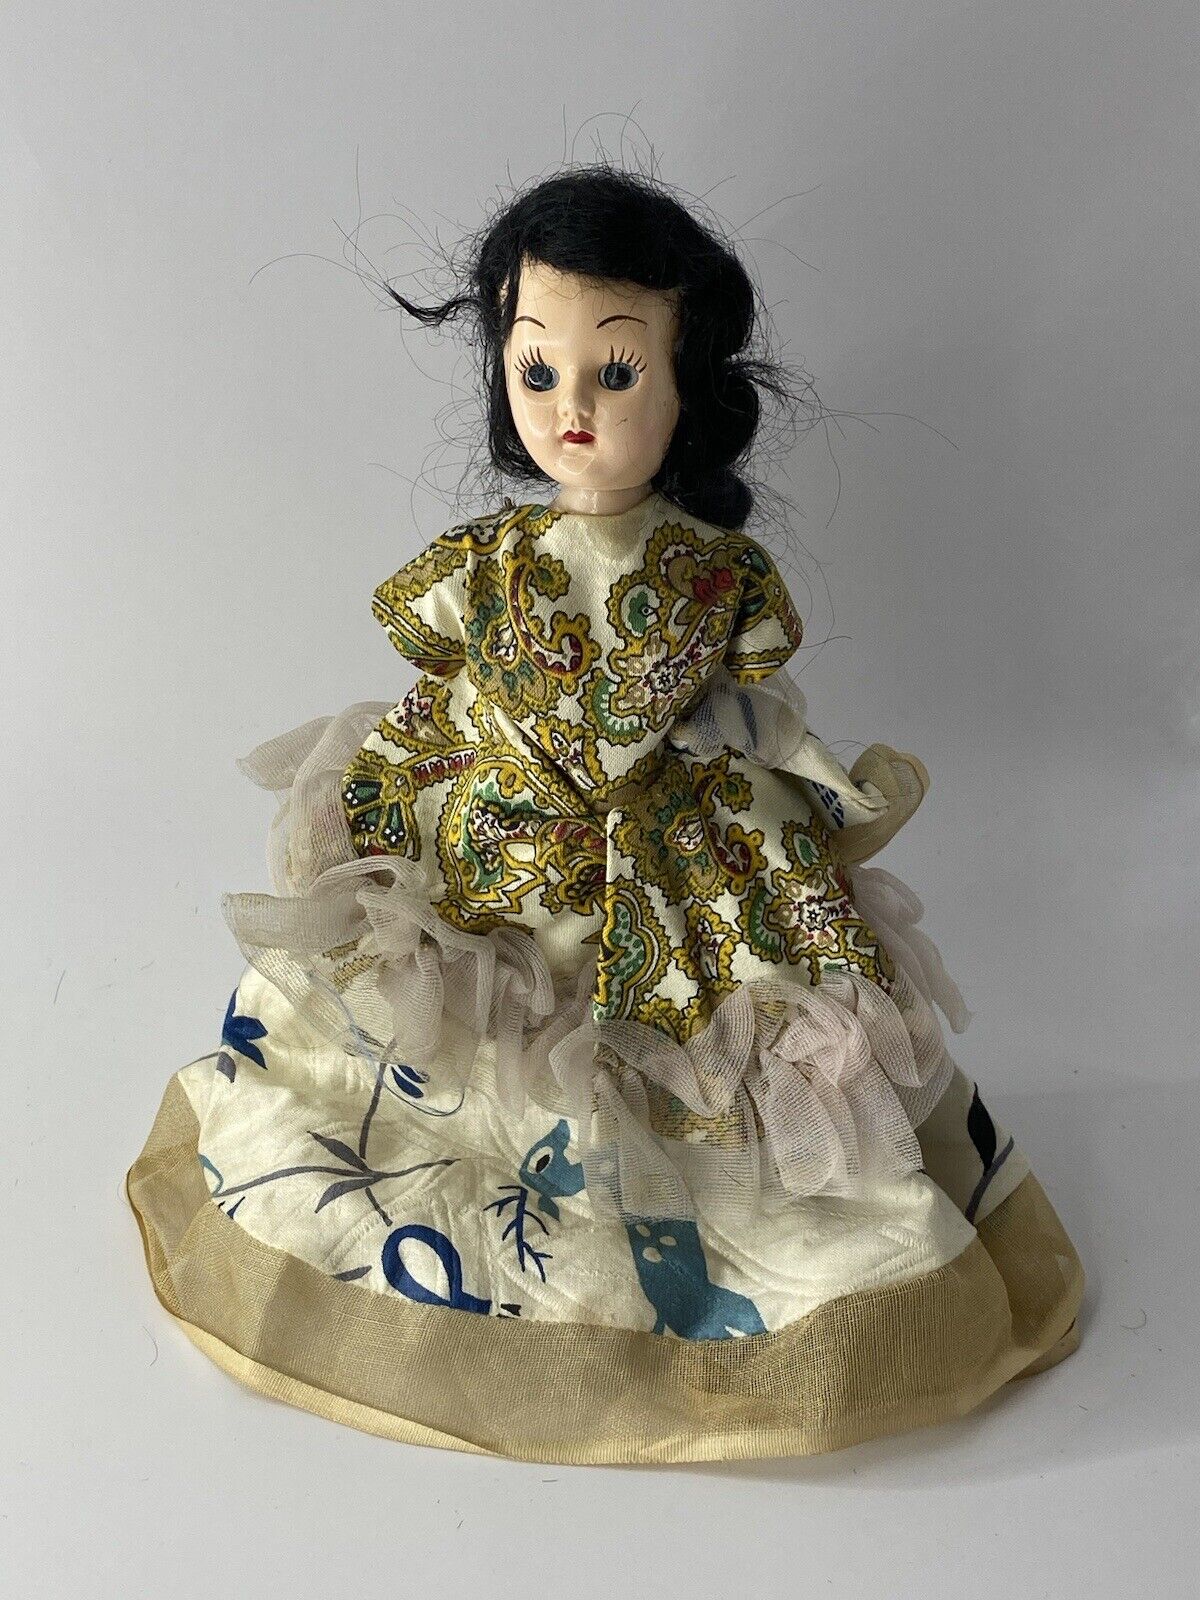 Vintage 1950s Hard Plastic Doll Dancer Dress Black Hair 7” No Arms Priced Low